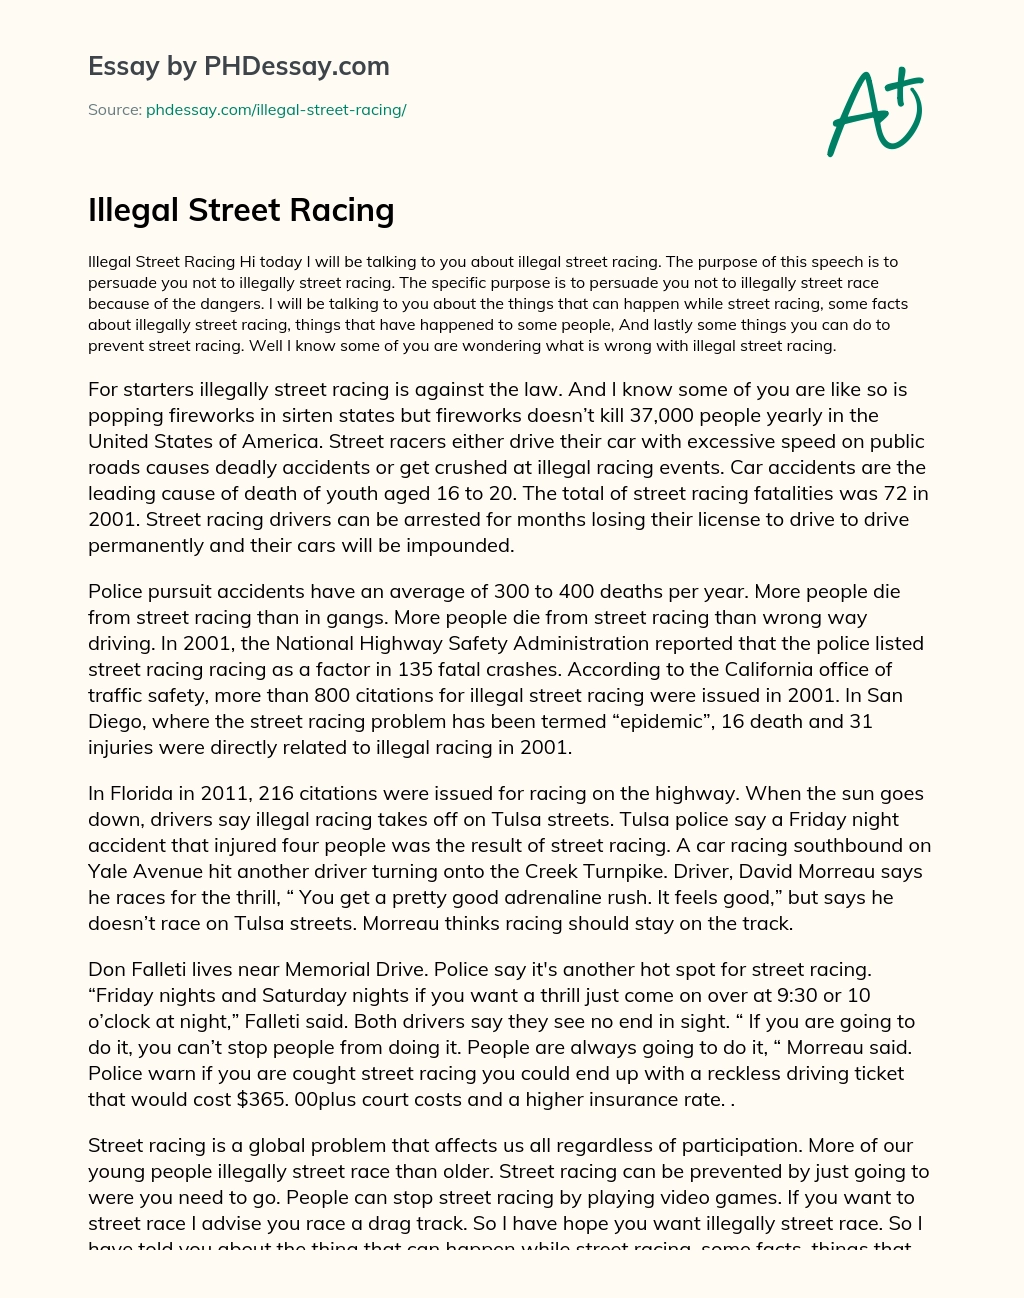 Illegal Street Racing essay